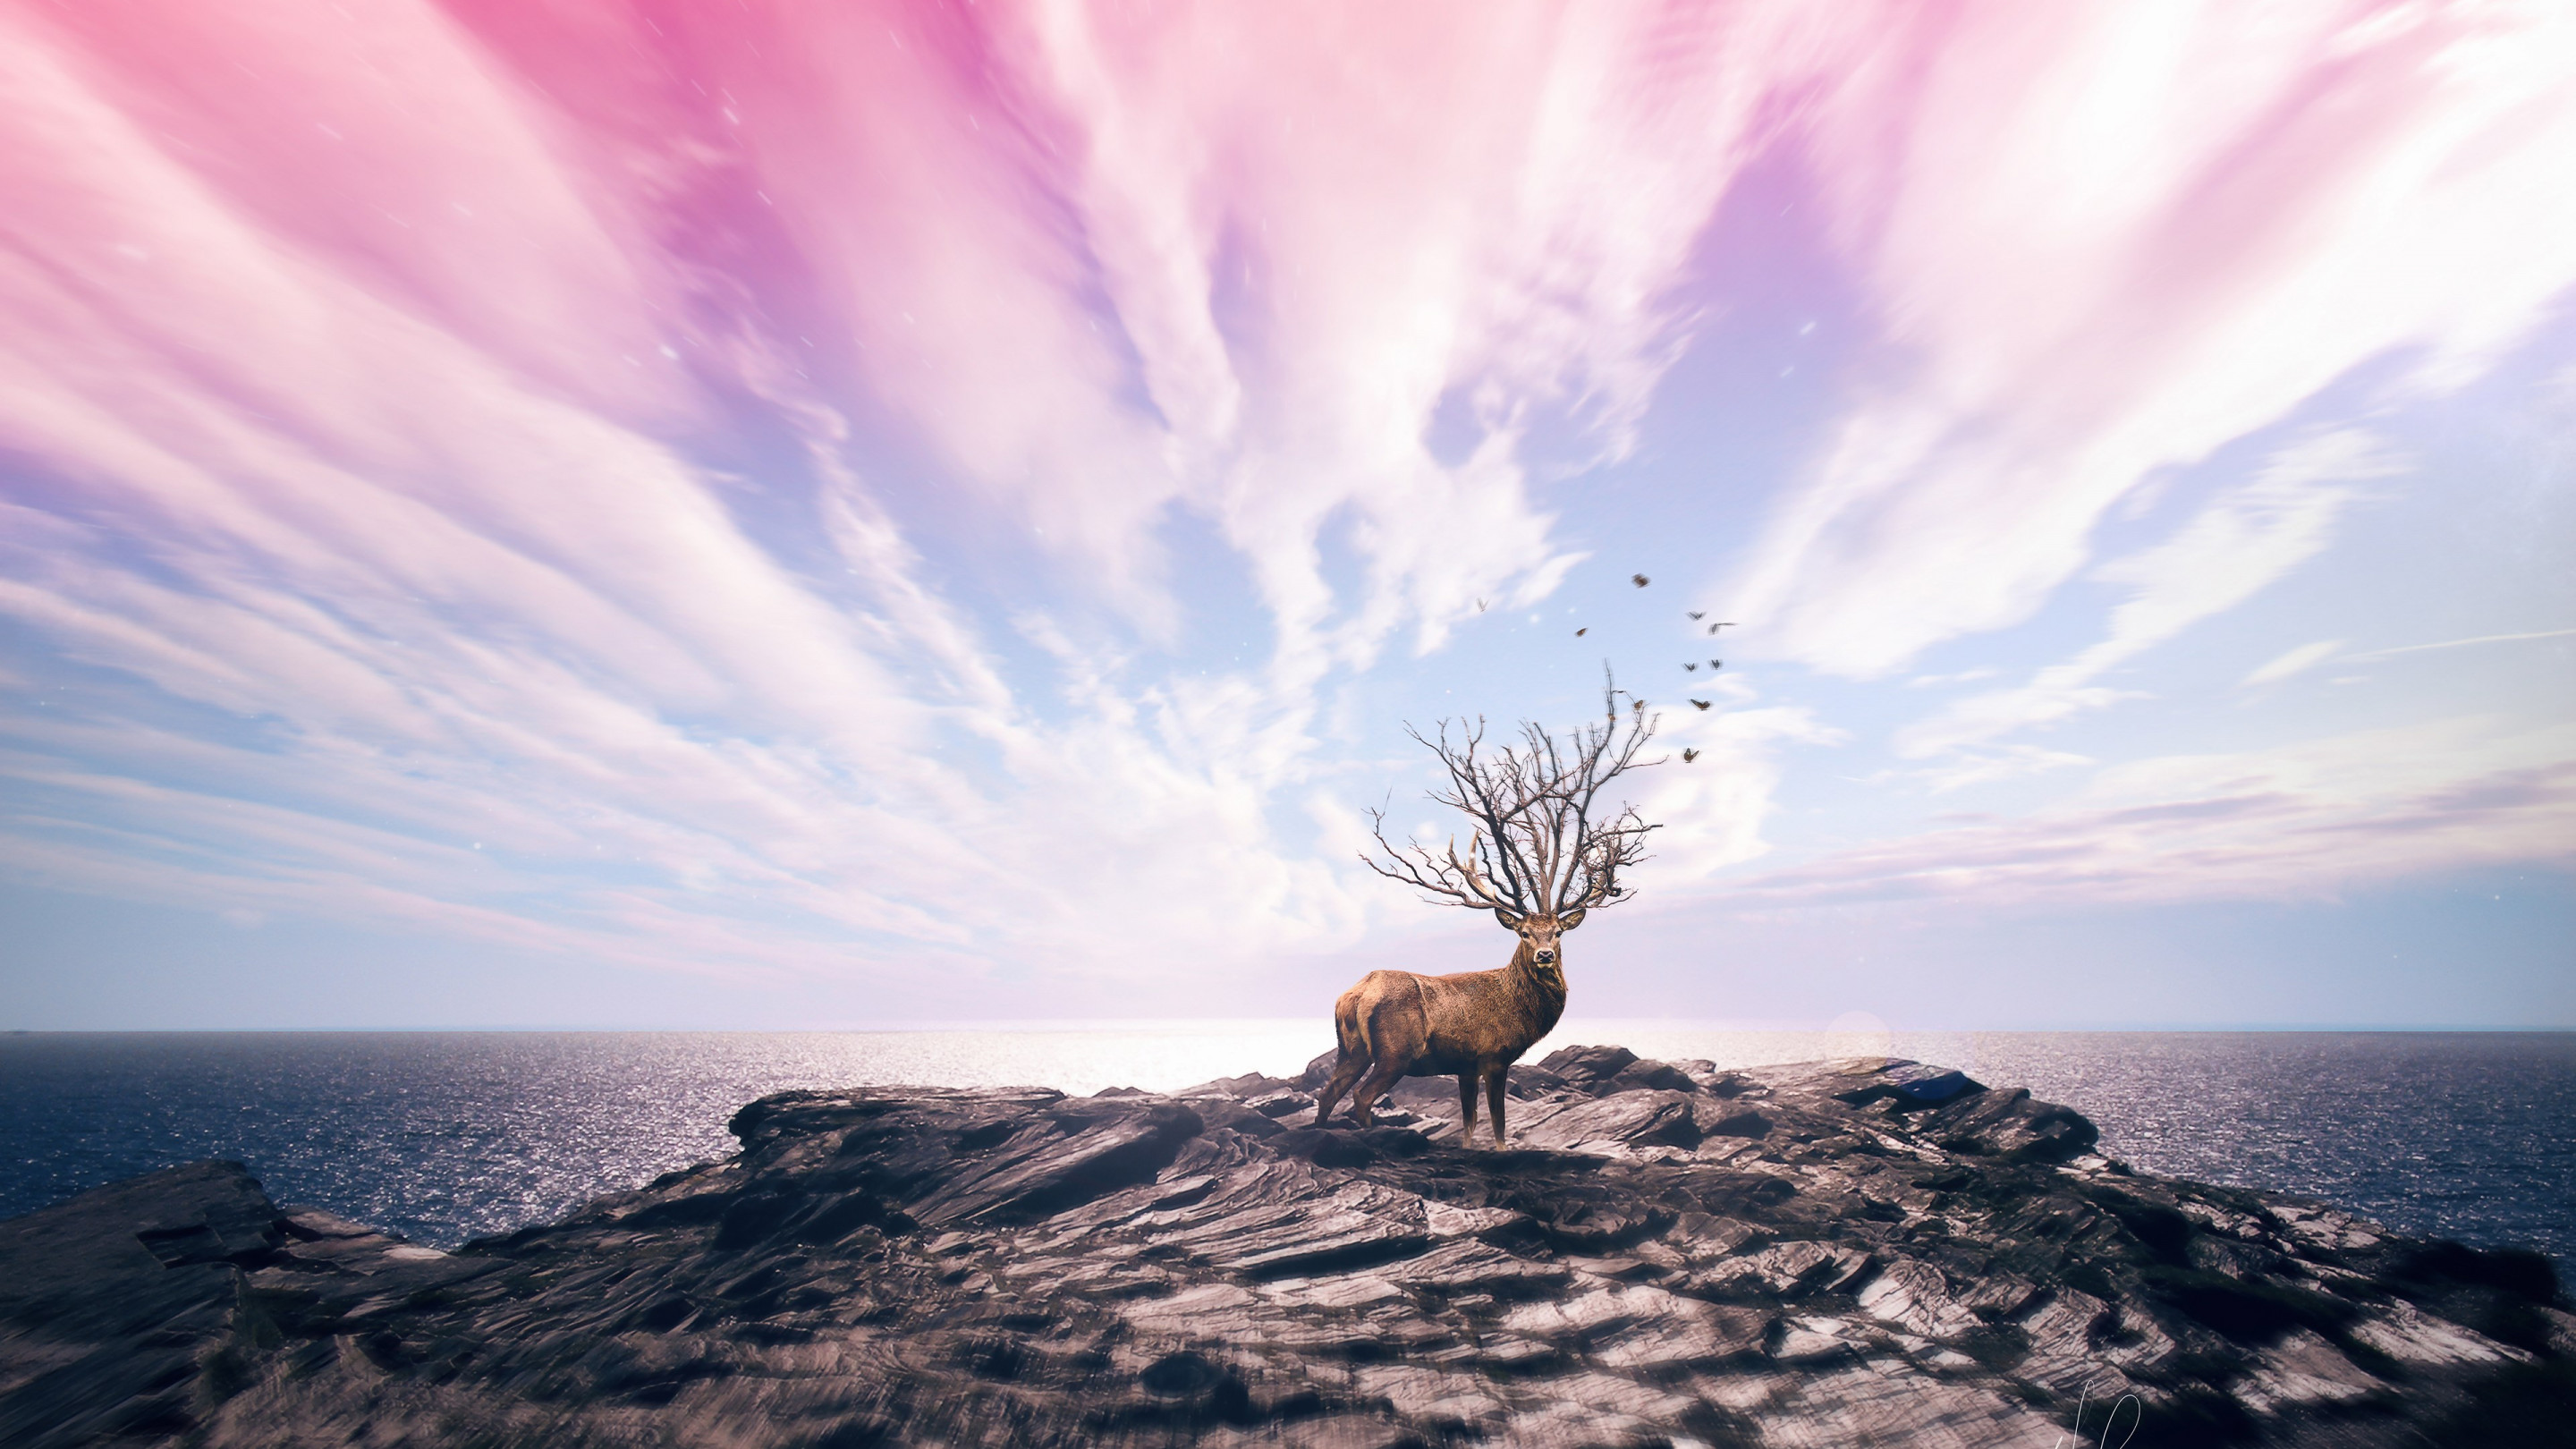 Digital art with deer wallpaper 2880x1620